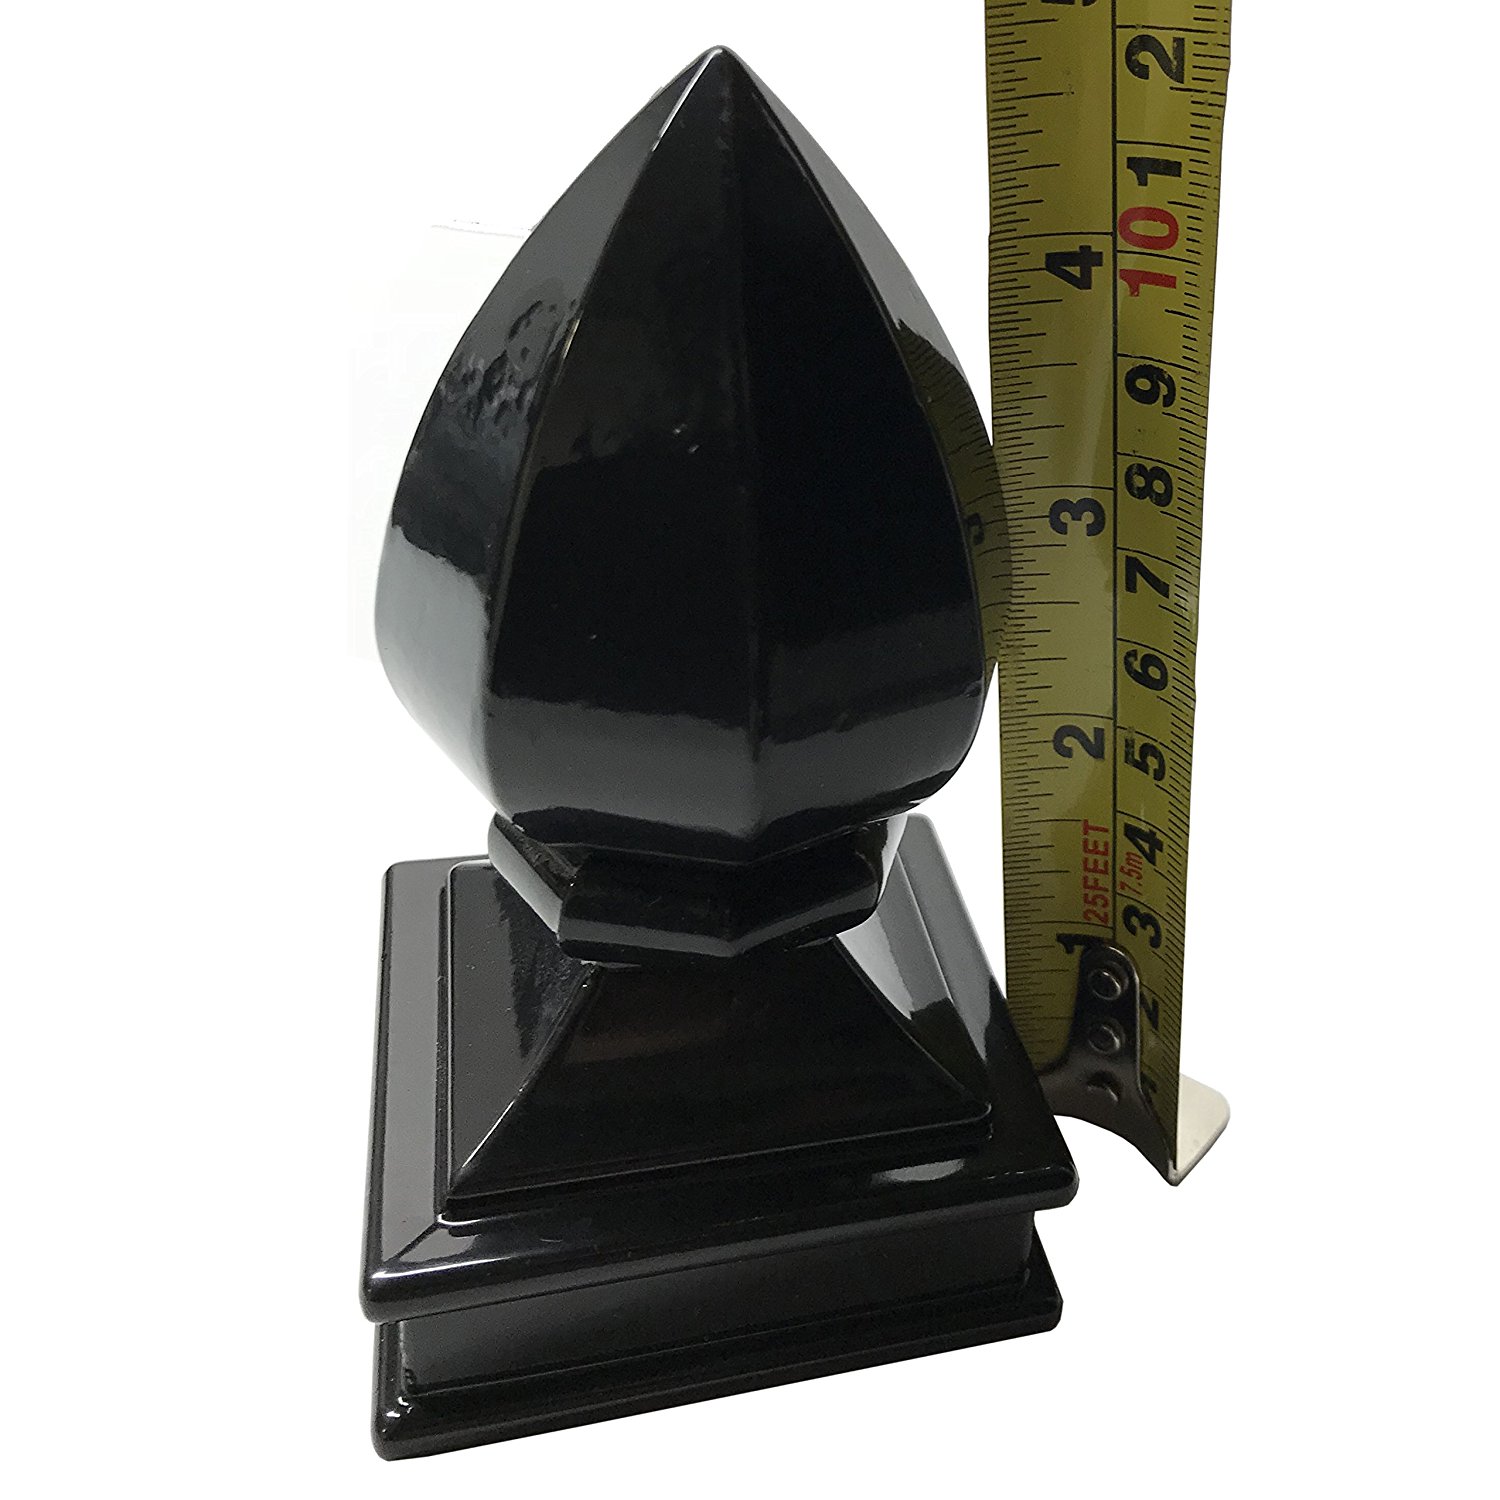 Decorex Hardware Aluminium Pineapple Post Cap for 2" x 2" Metal Posts - Pressure Fit - Black